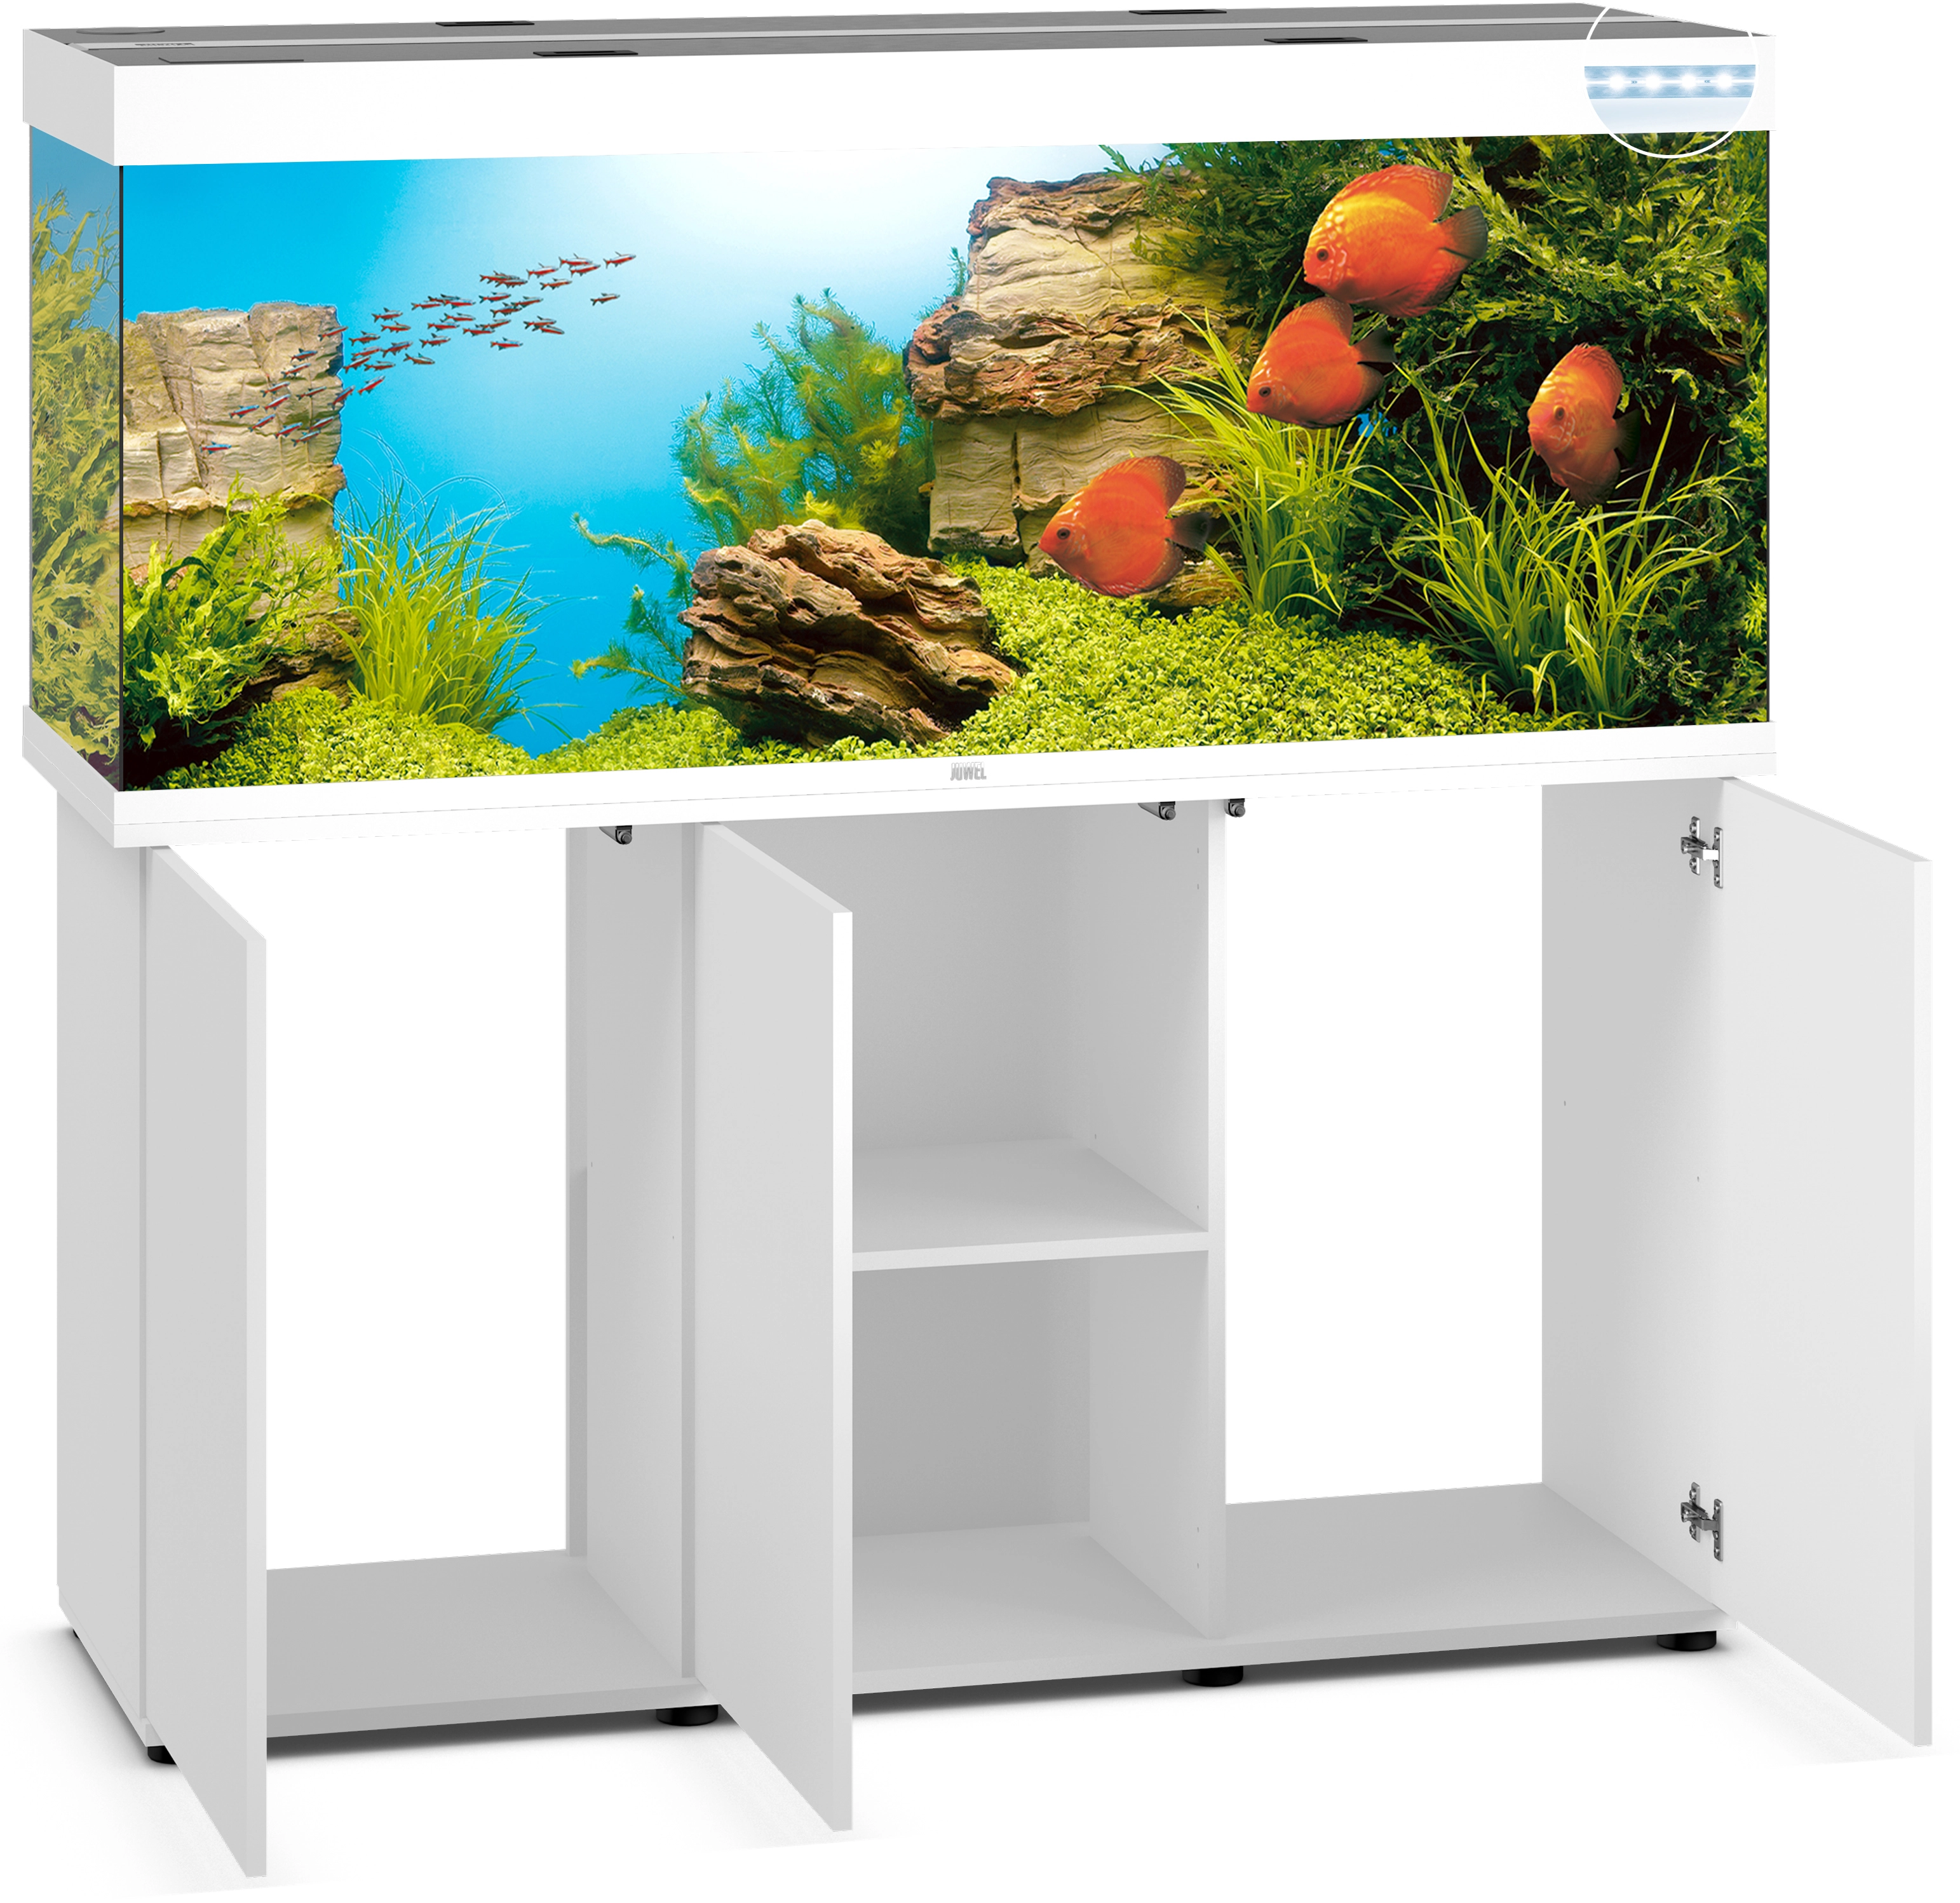 Juwel Aquarium-Set Rio LED SBX Weiß 450 l inkl. Unterschrank kaufen bei OBI